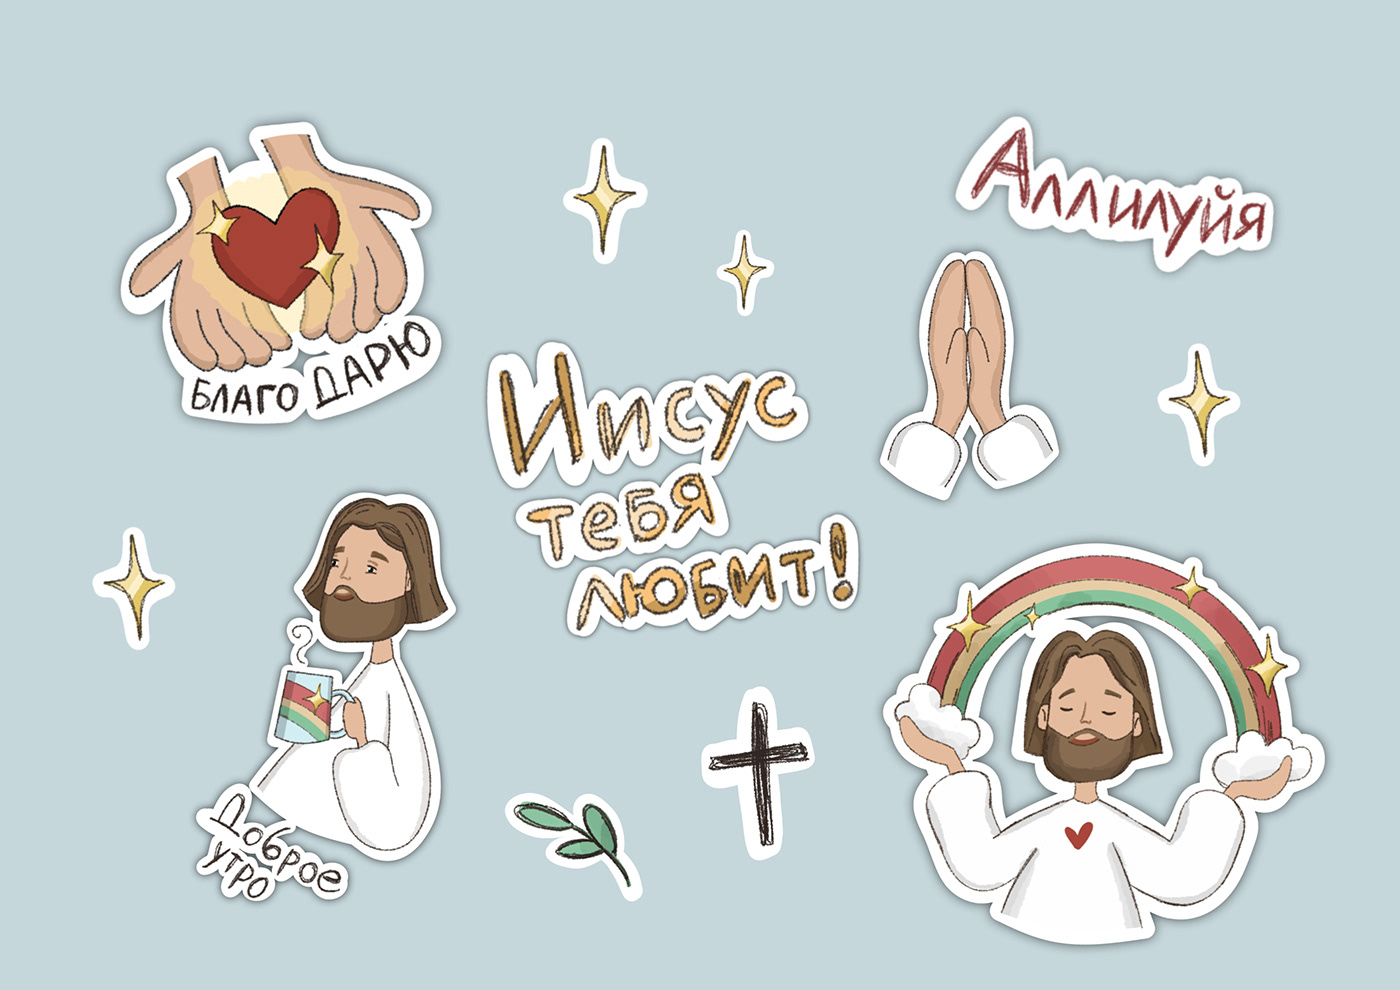 stickers telegram stickers стикеры christian illustration христианские иллюстрации христианство